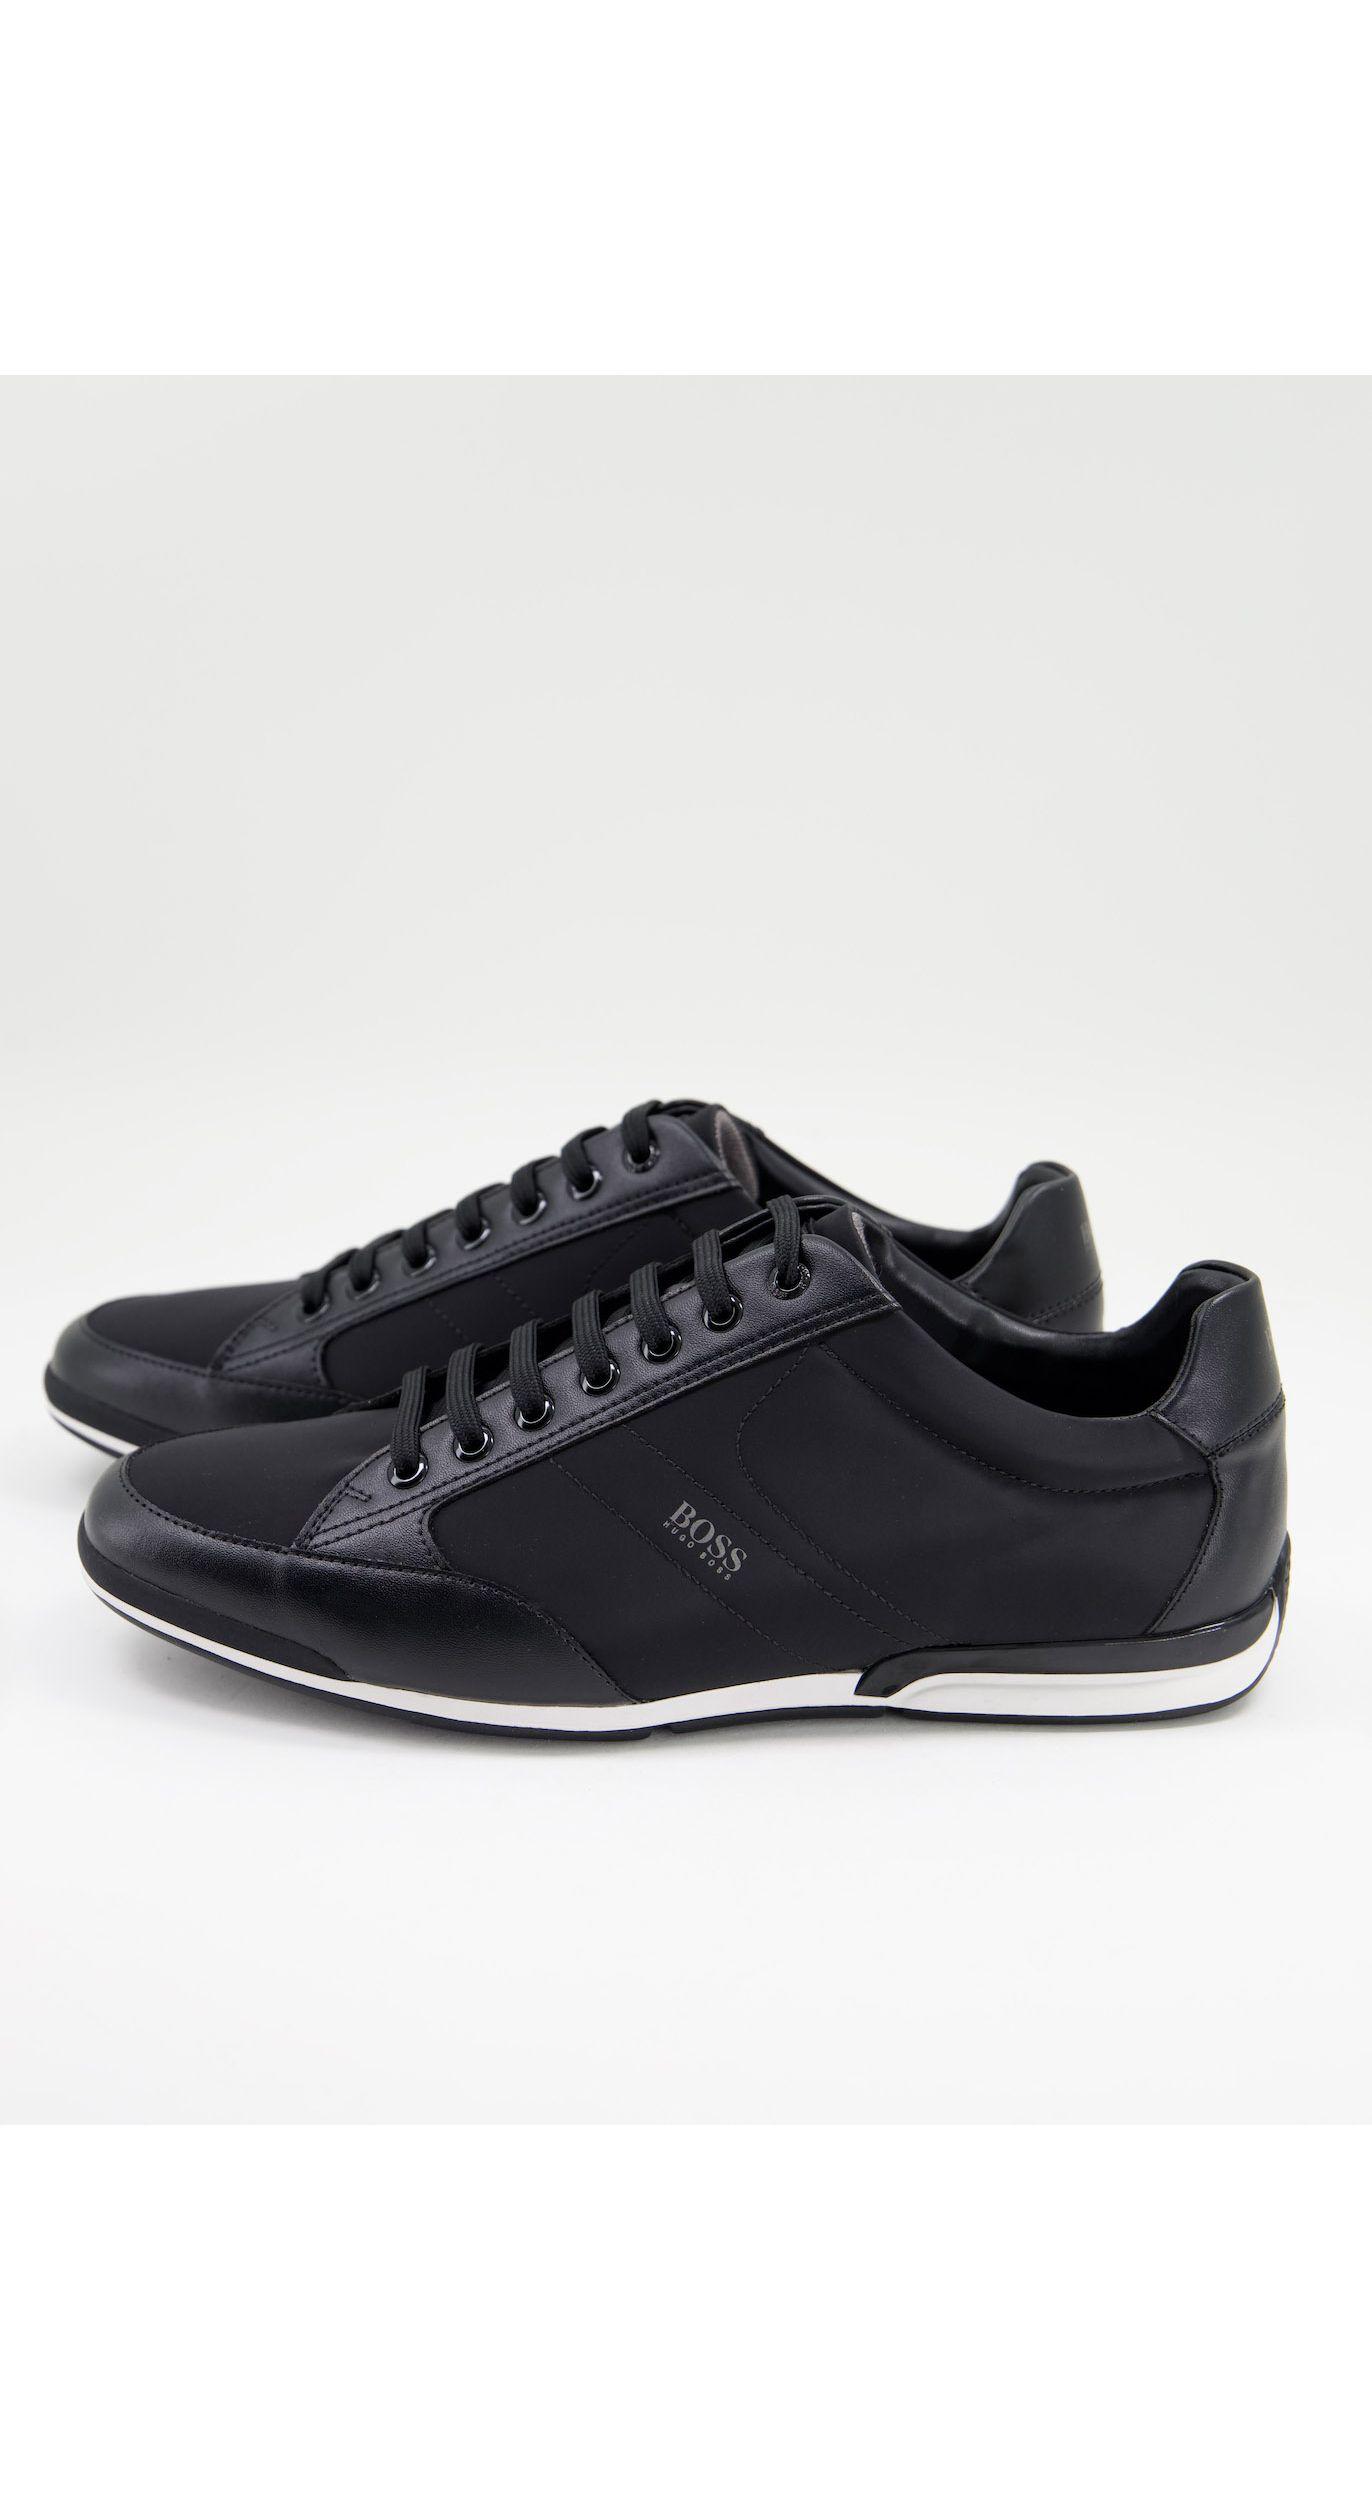 BOSS by HUGO BOSS Saturn Lowp Leather Logo Sneakers in Black for Men | Lyst